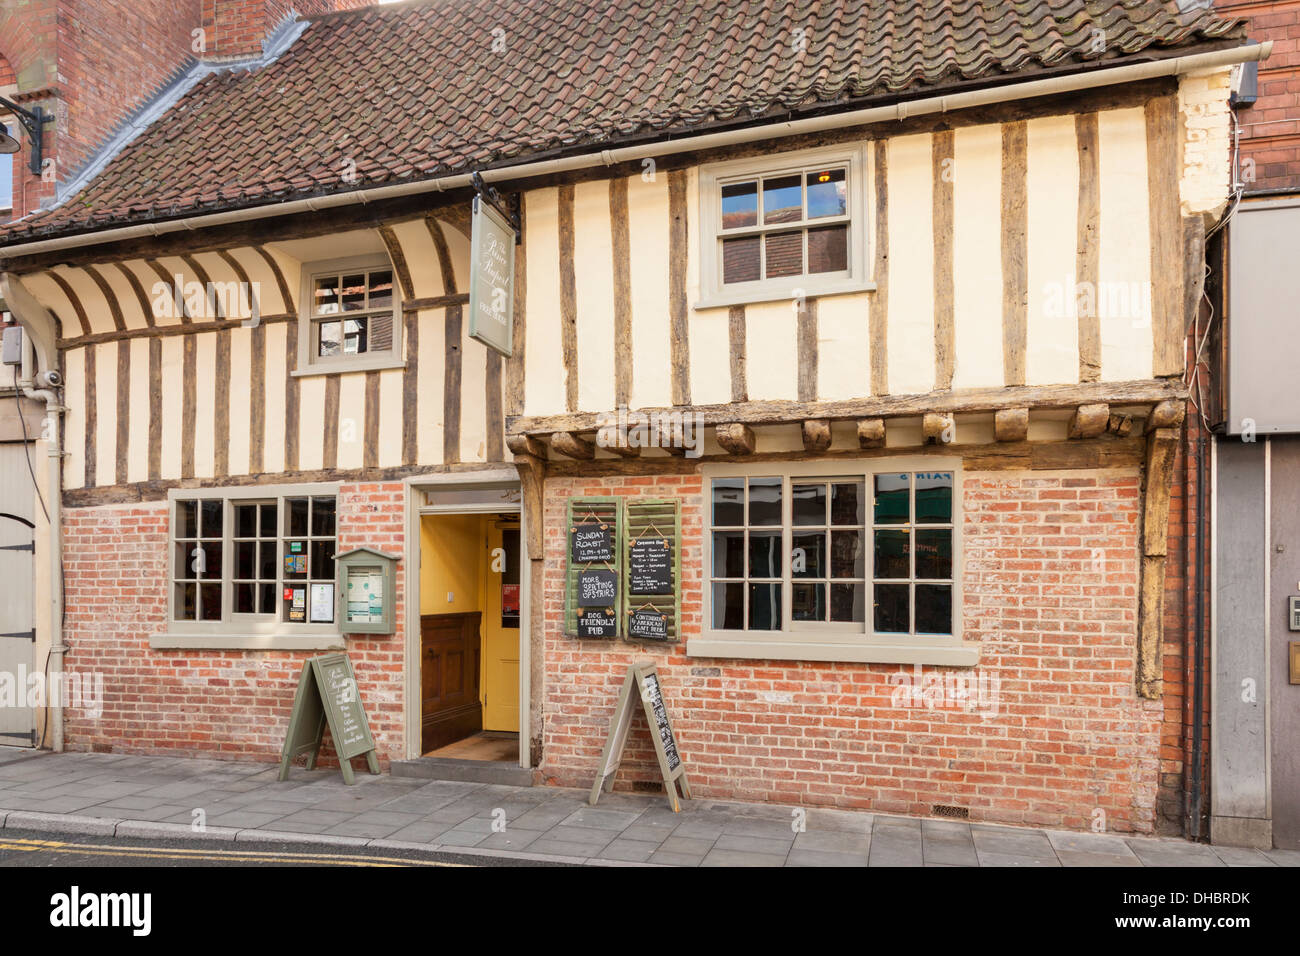 El siglo XV Prince Rupert Public House, un antiguo pub con entramados de madera histórico en Newark en Trento, Nottinghamshire, Inglaterra, Reino Unido. Foto de stock